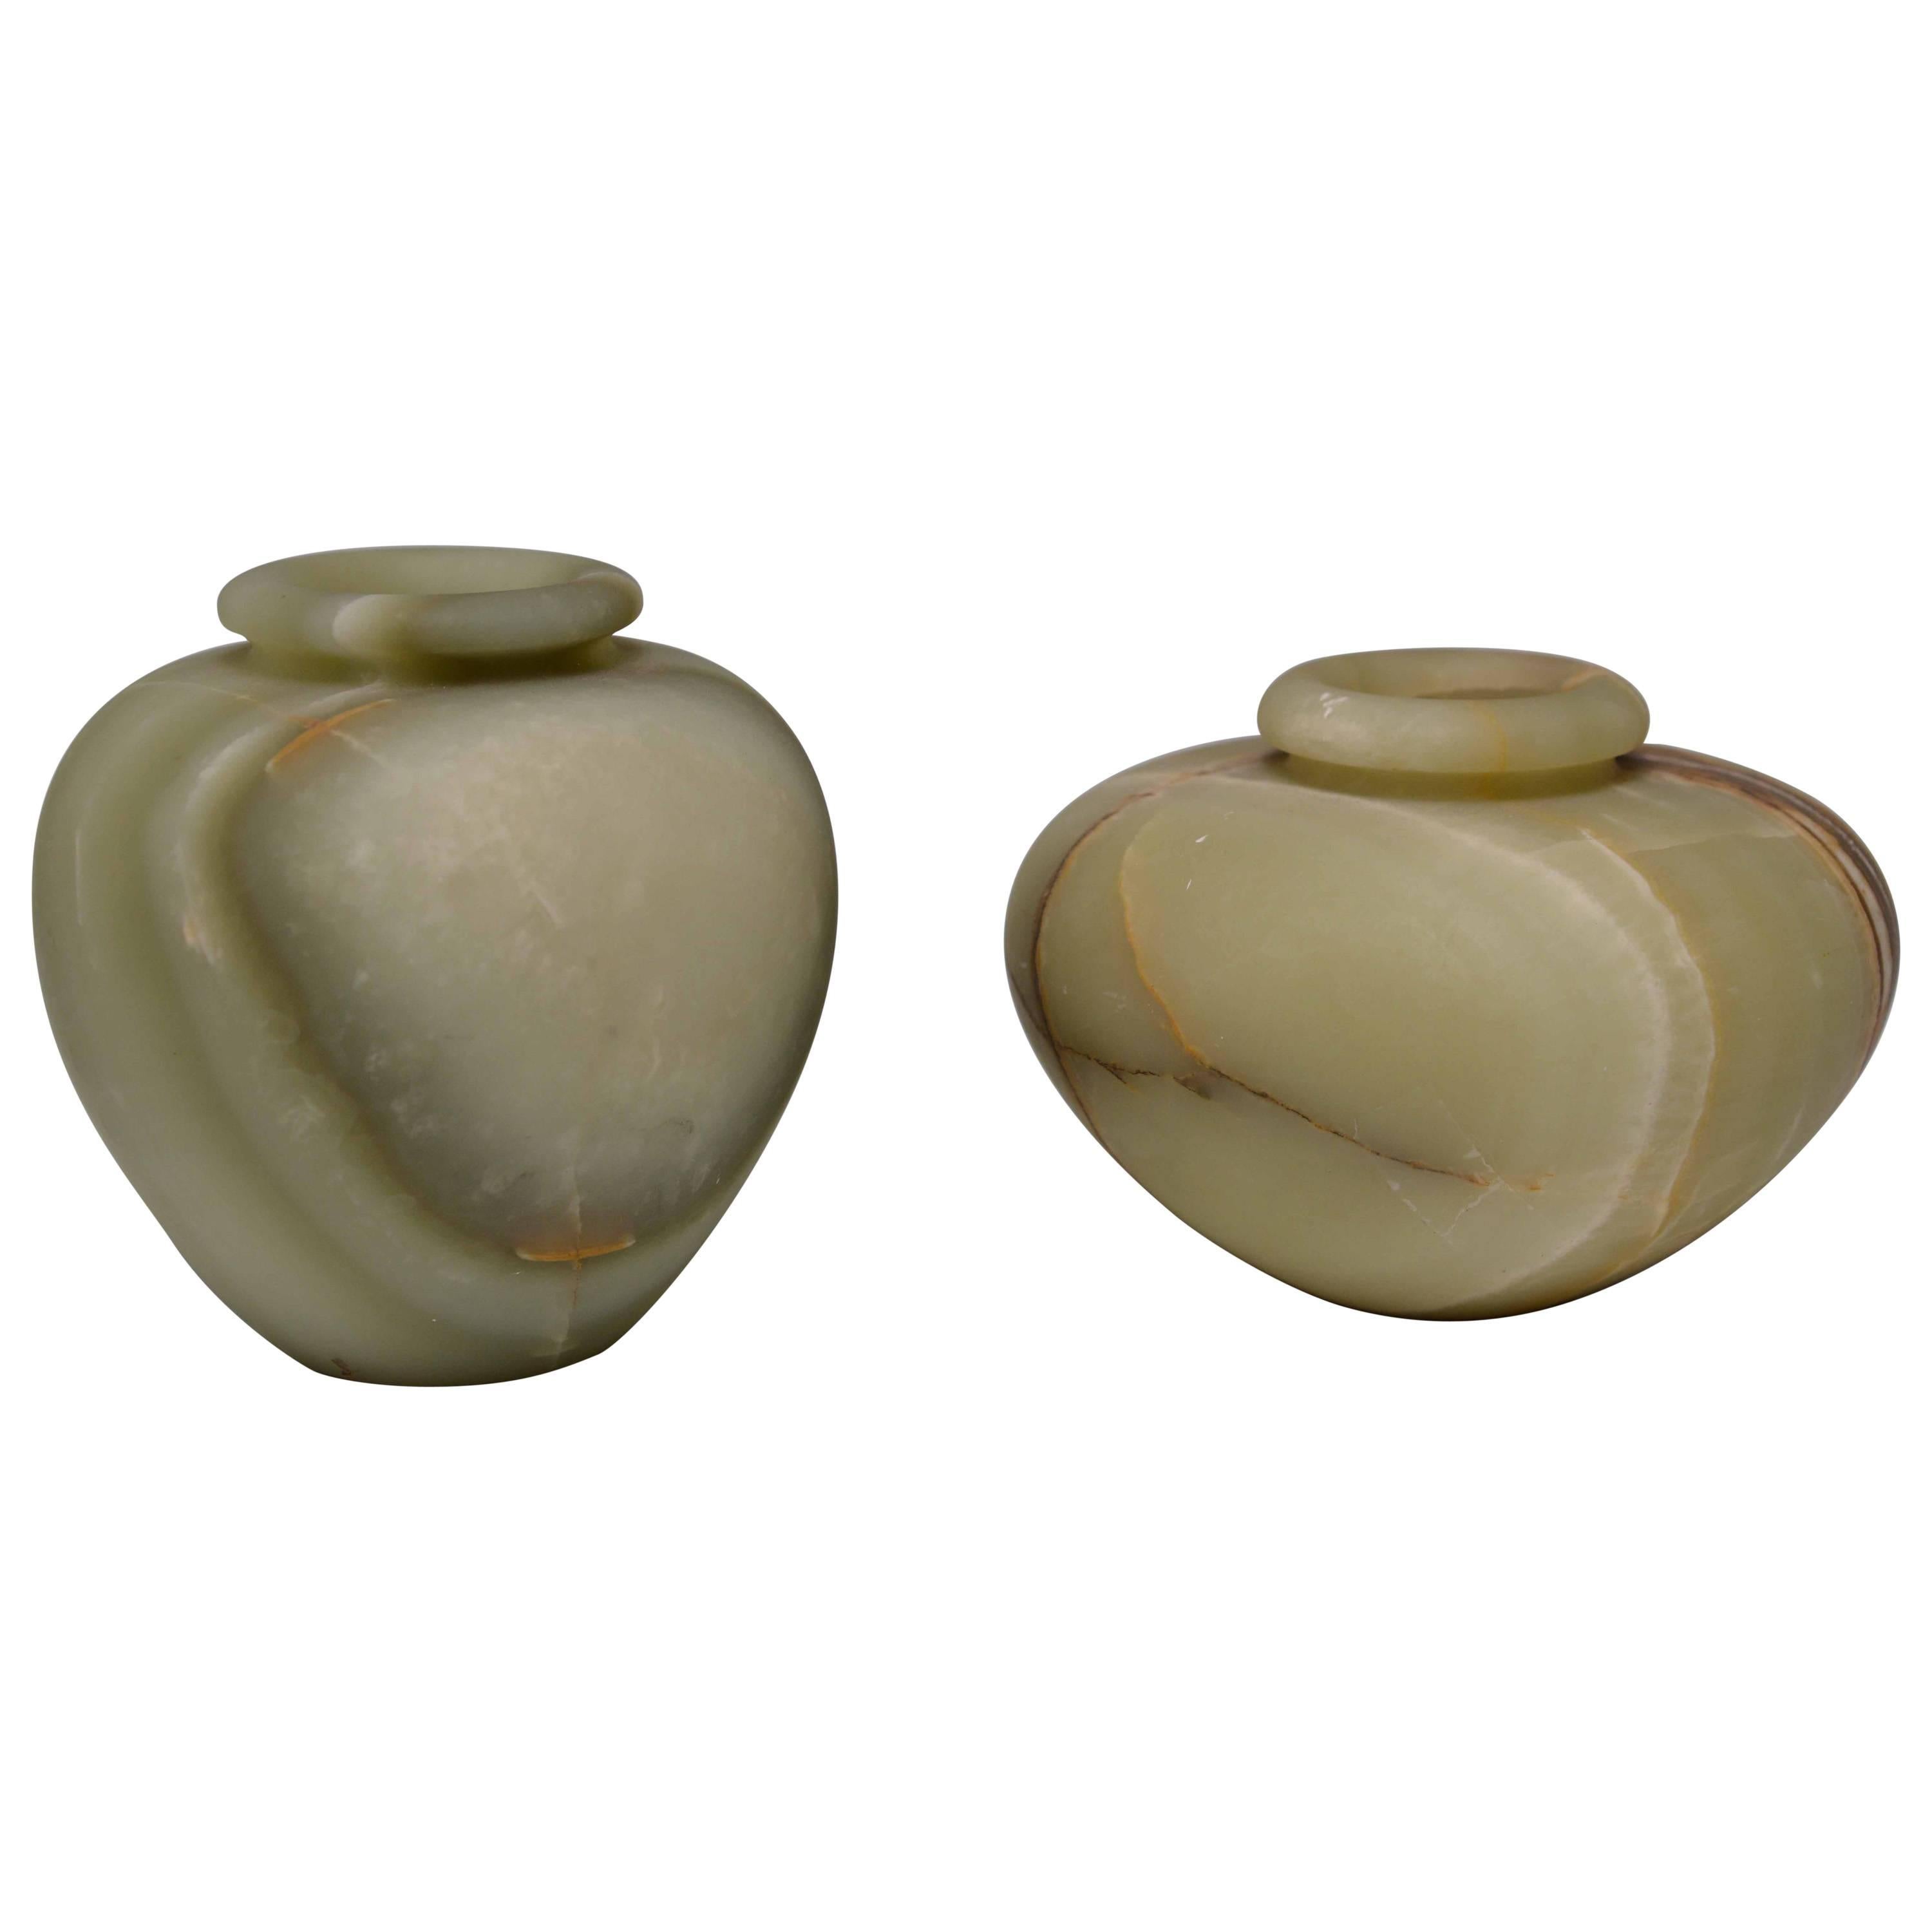 Group of Two Carved Celadon Jade Jars